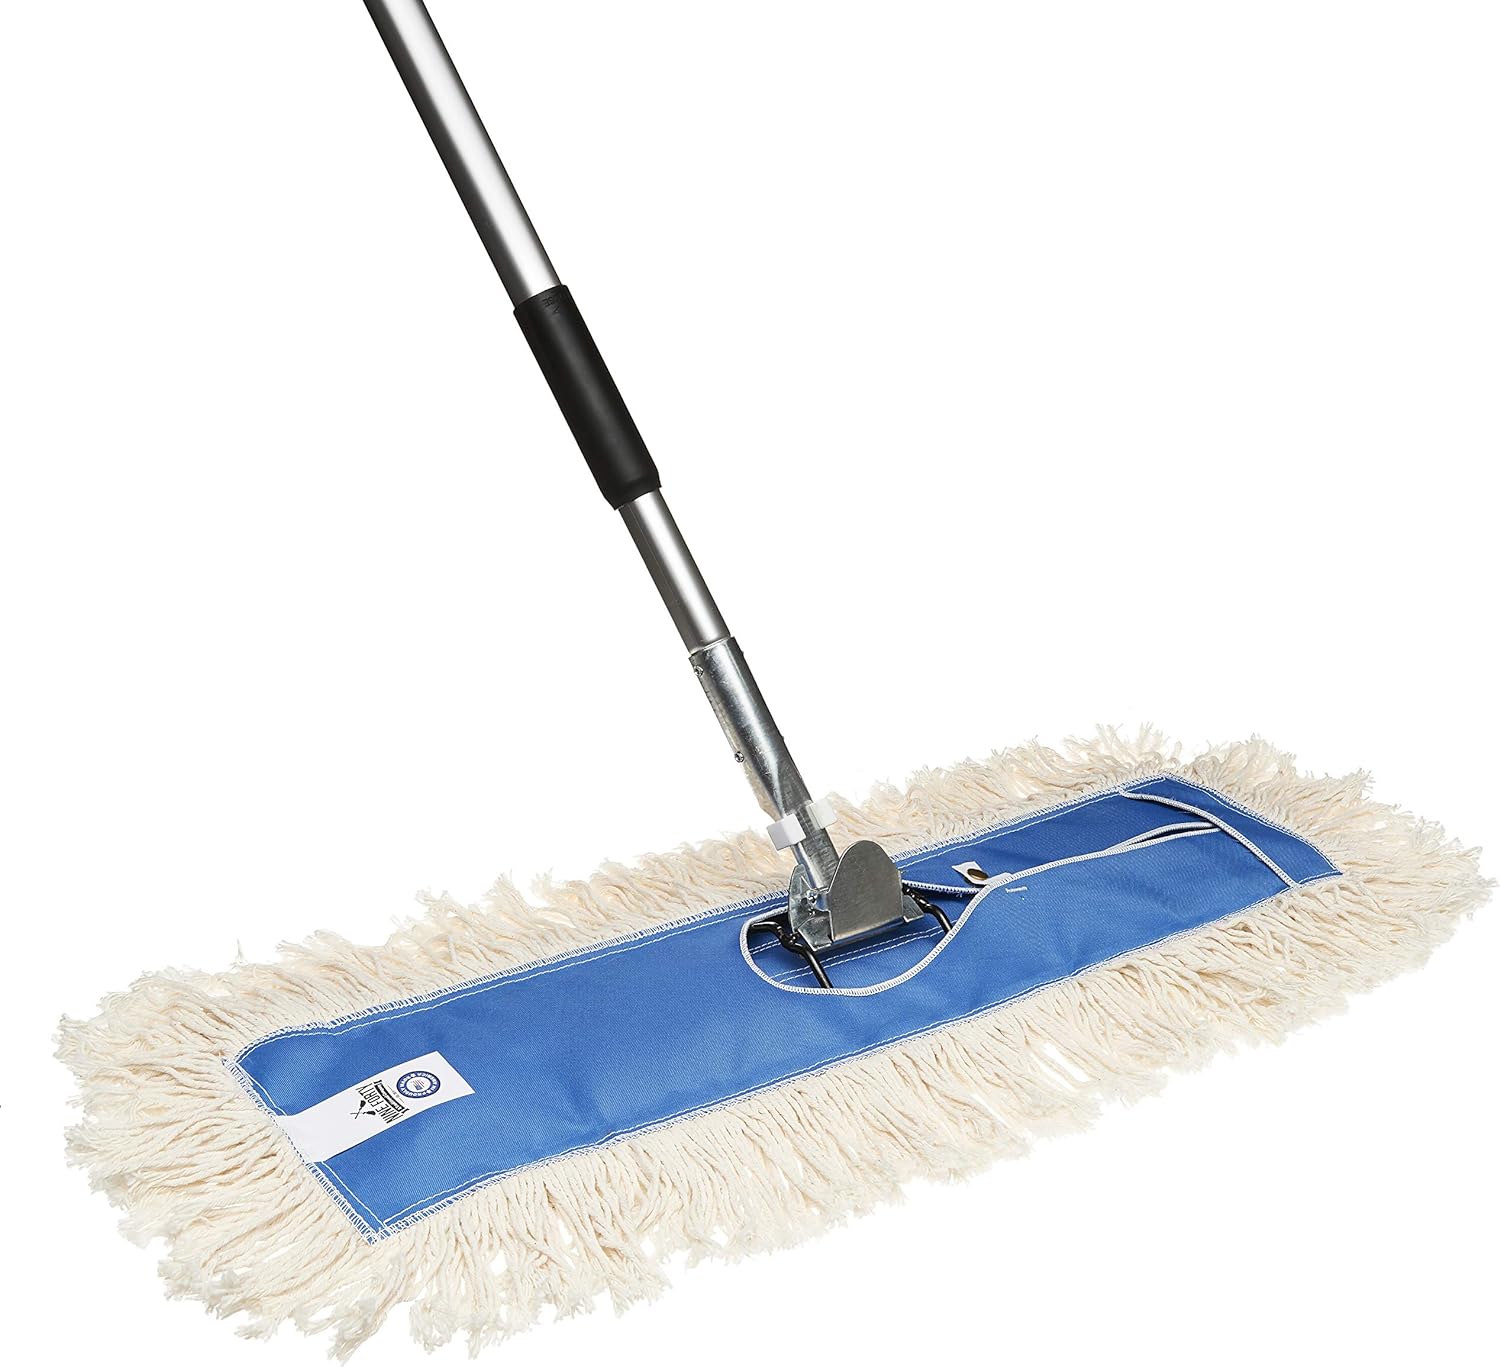 A broom sweeping dust.